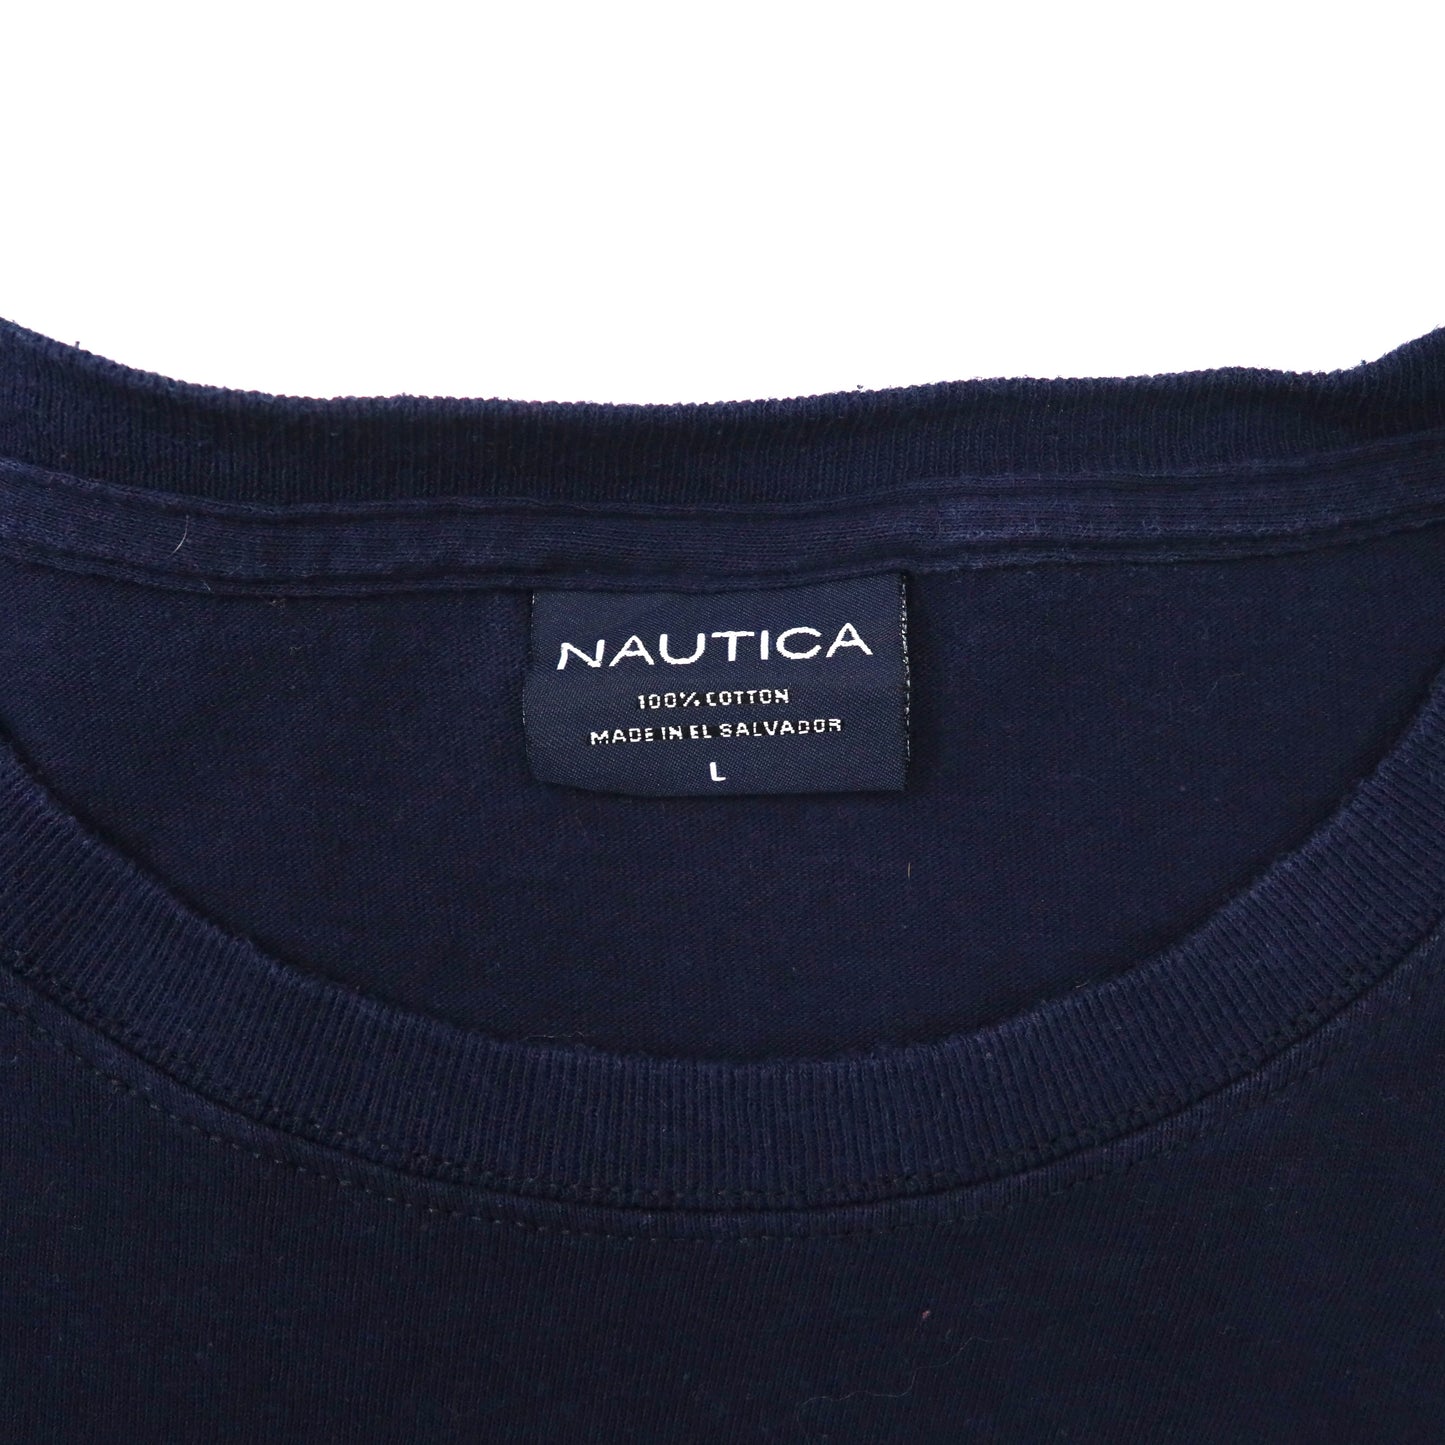 NAUTICA ロングスリーブTシャツ L ネイビー コットン ロゴプリント エルサルバドル製